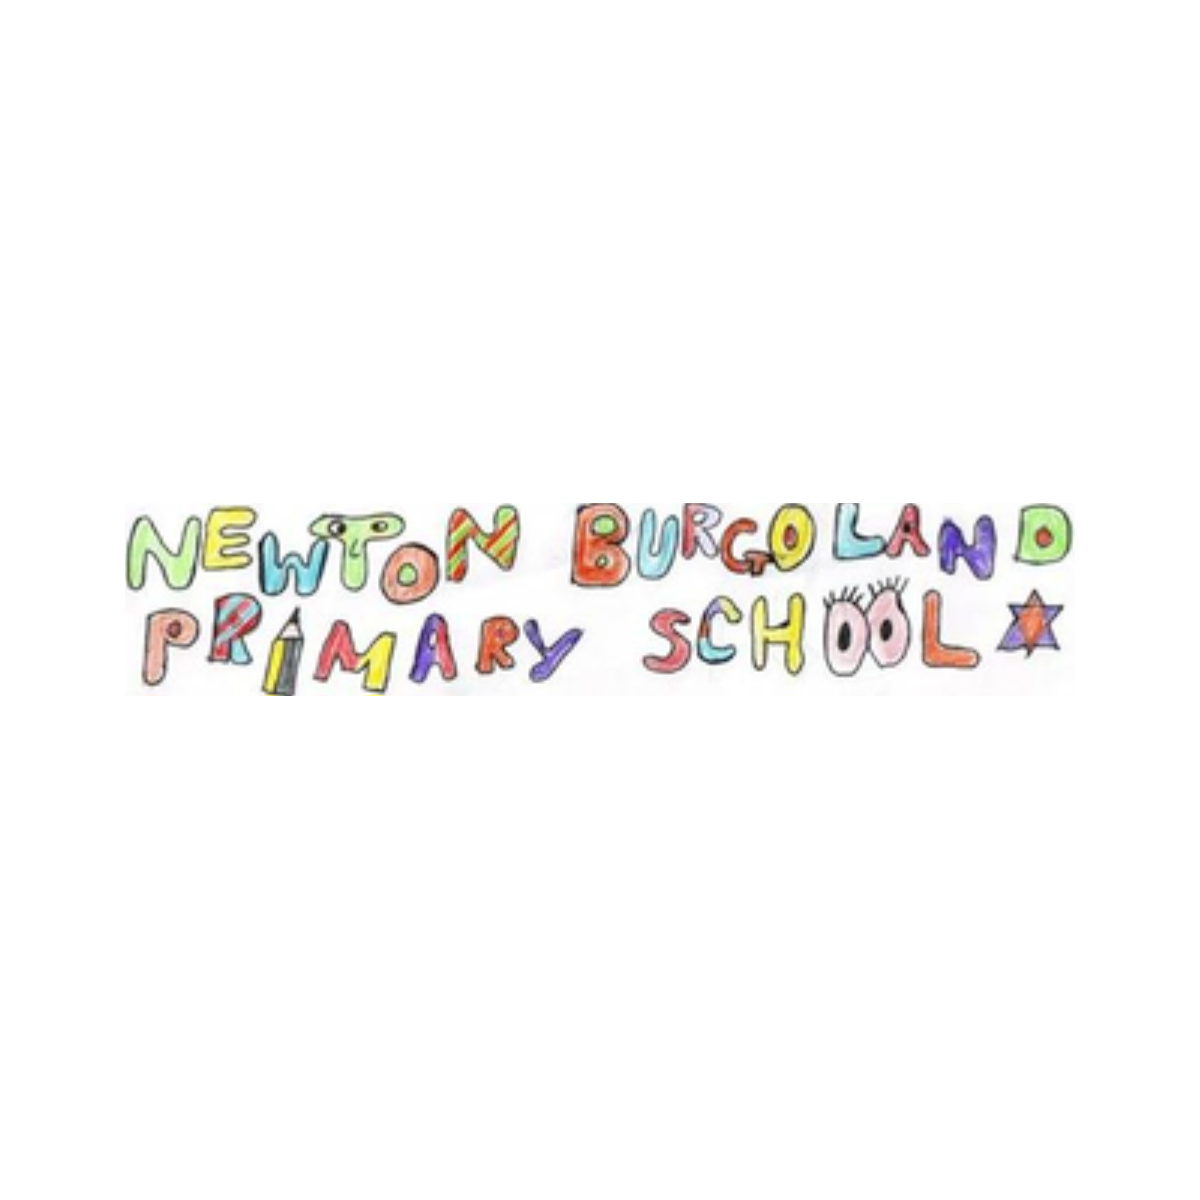 Newton Burgoland Primary School Logo